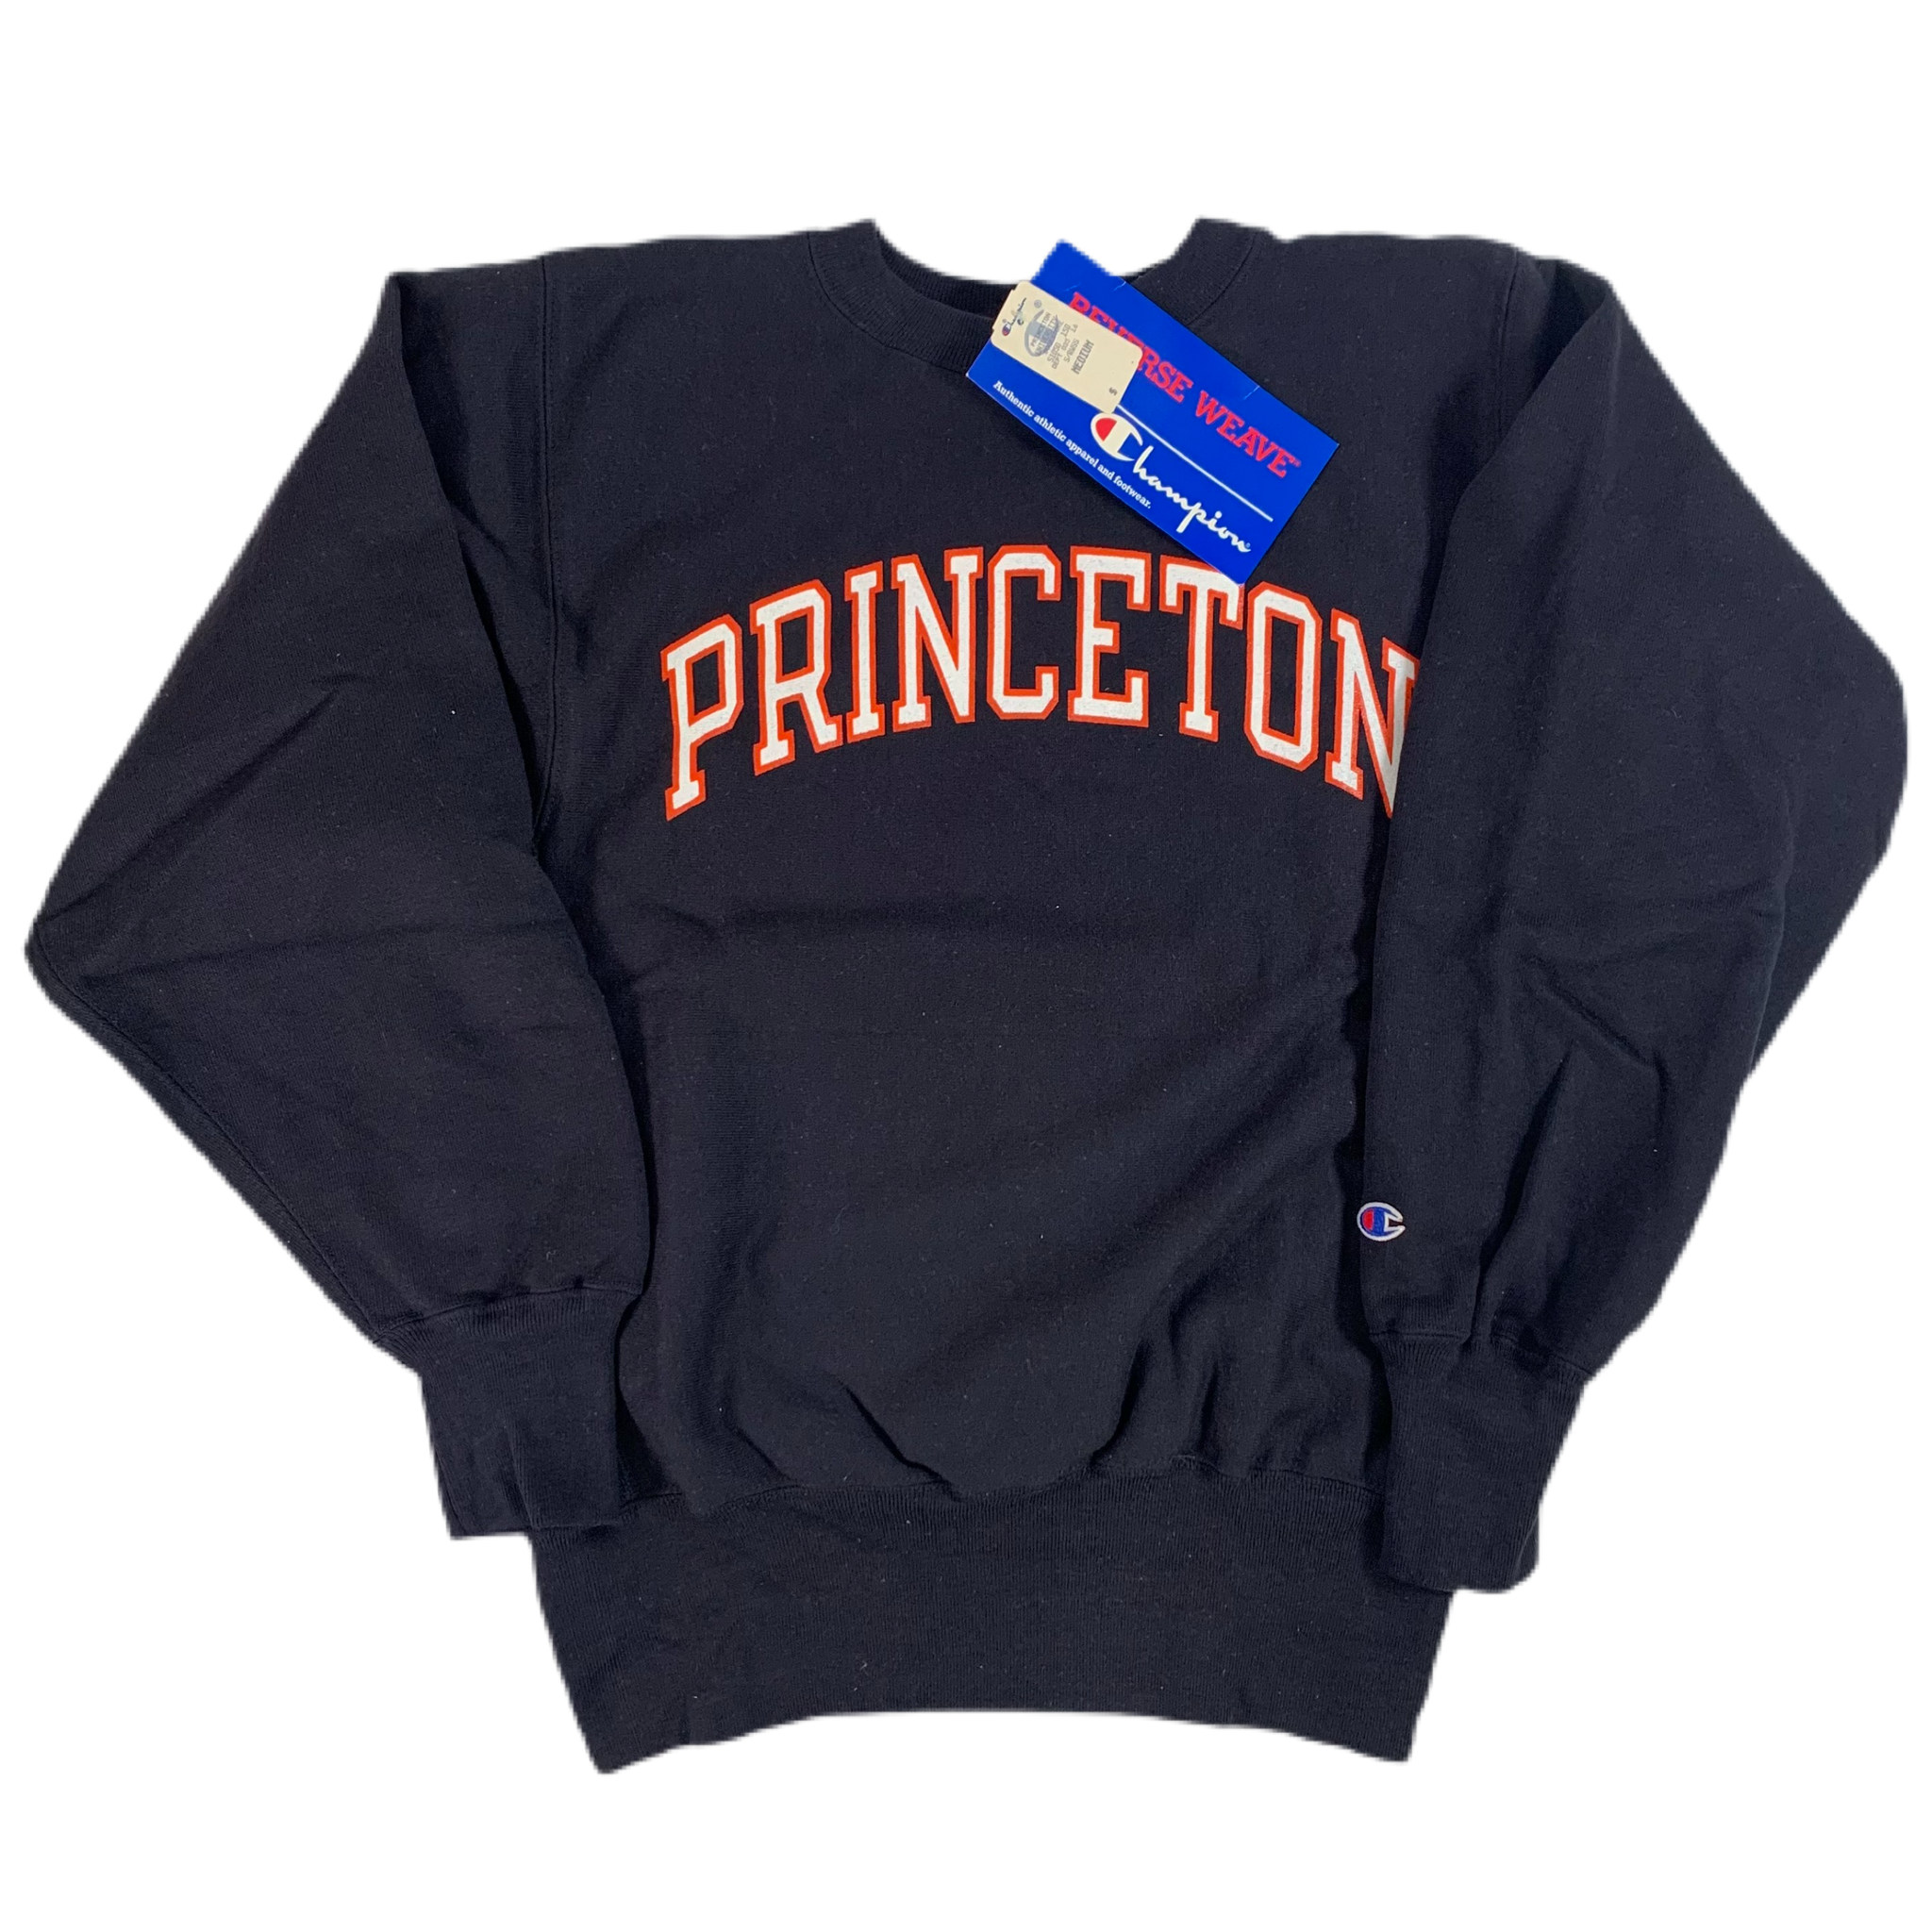 Vintage Princeton Champion 